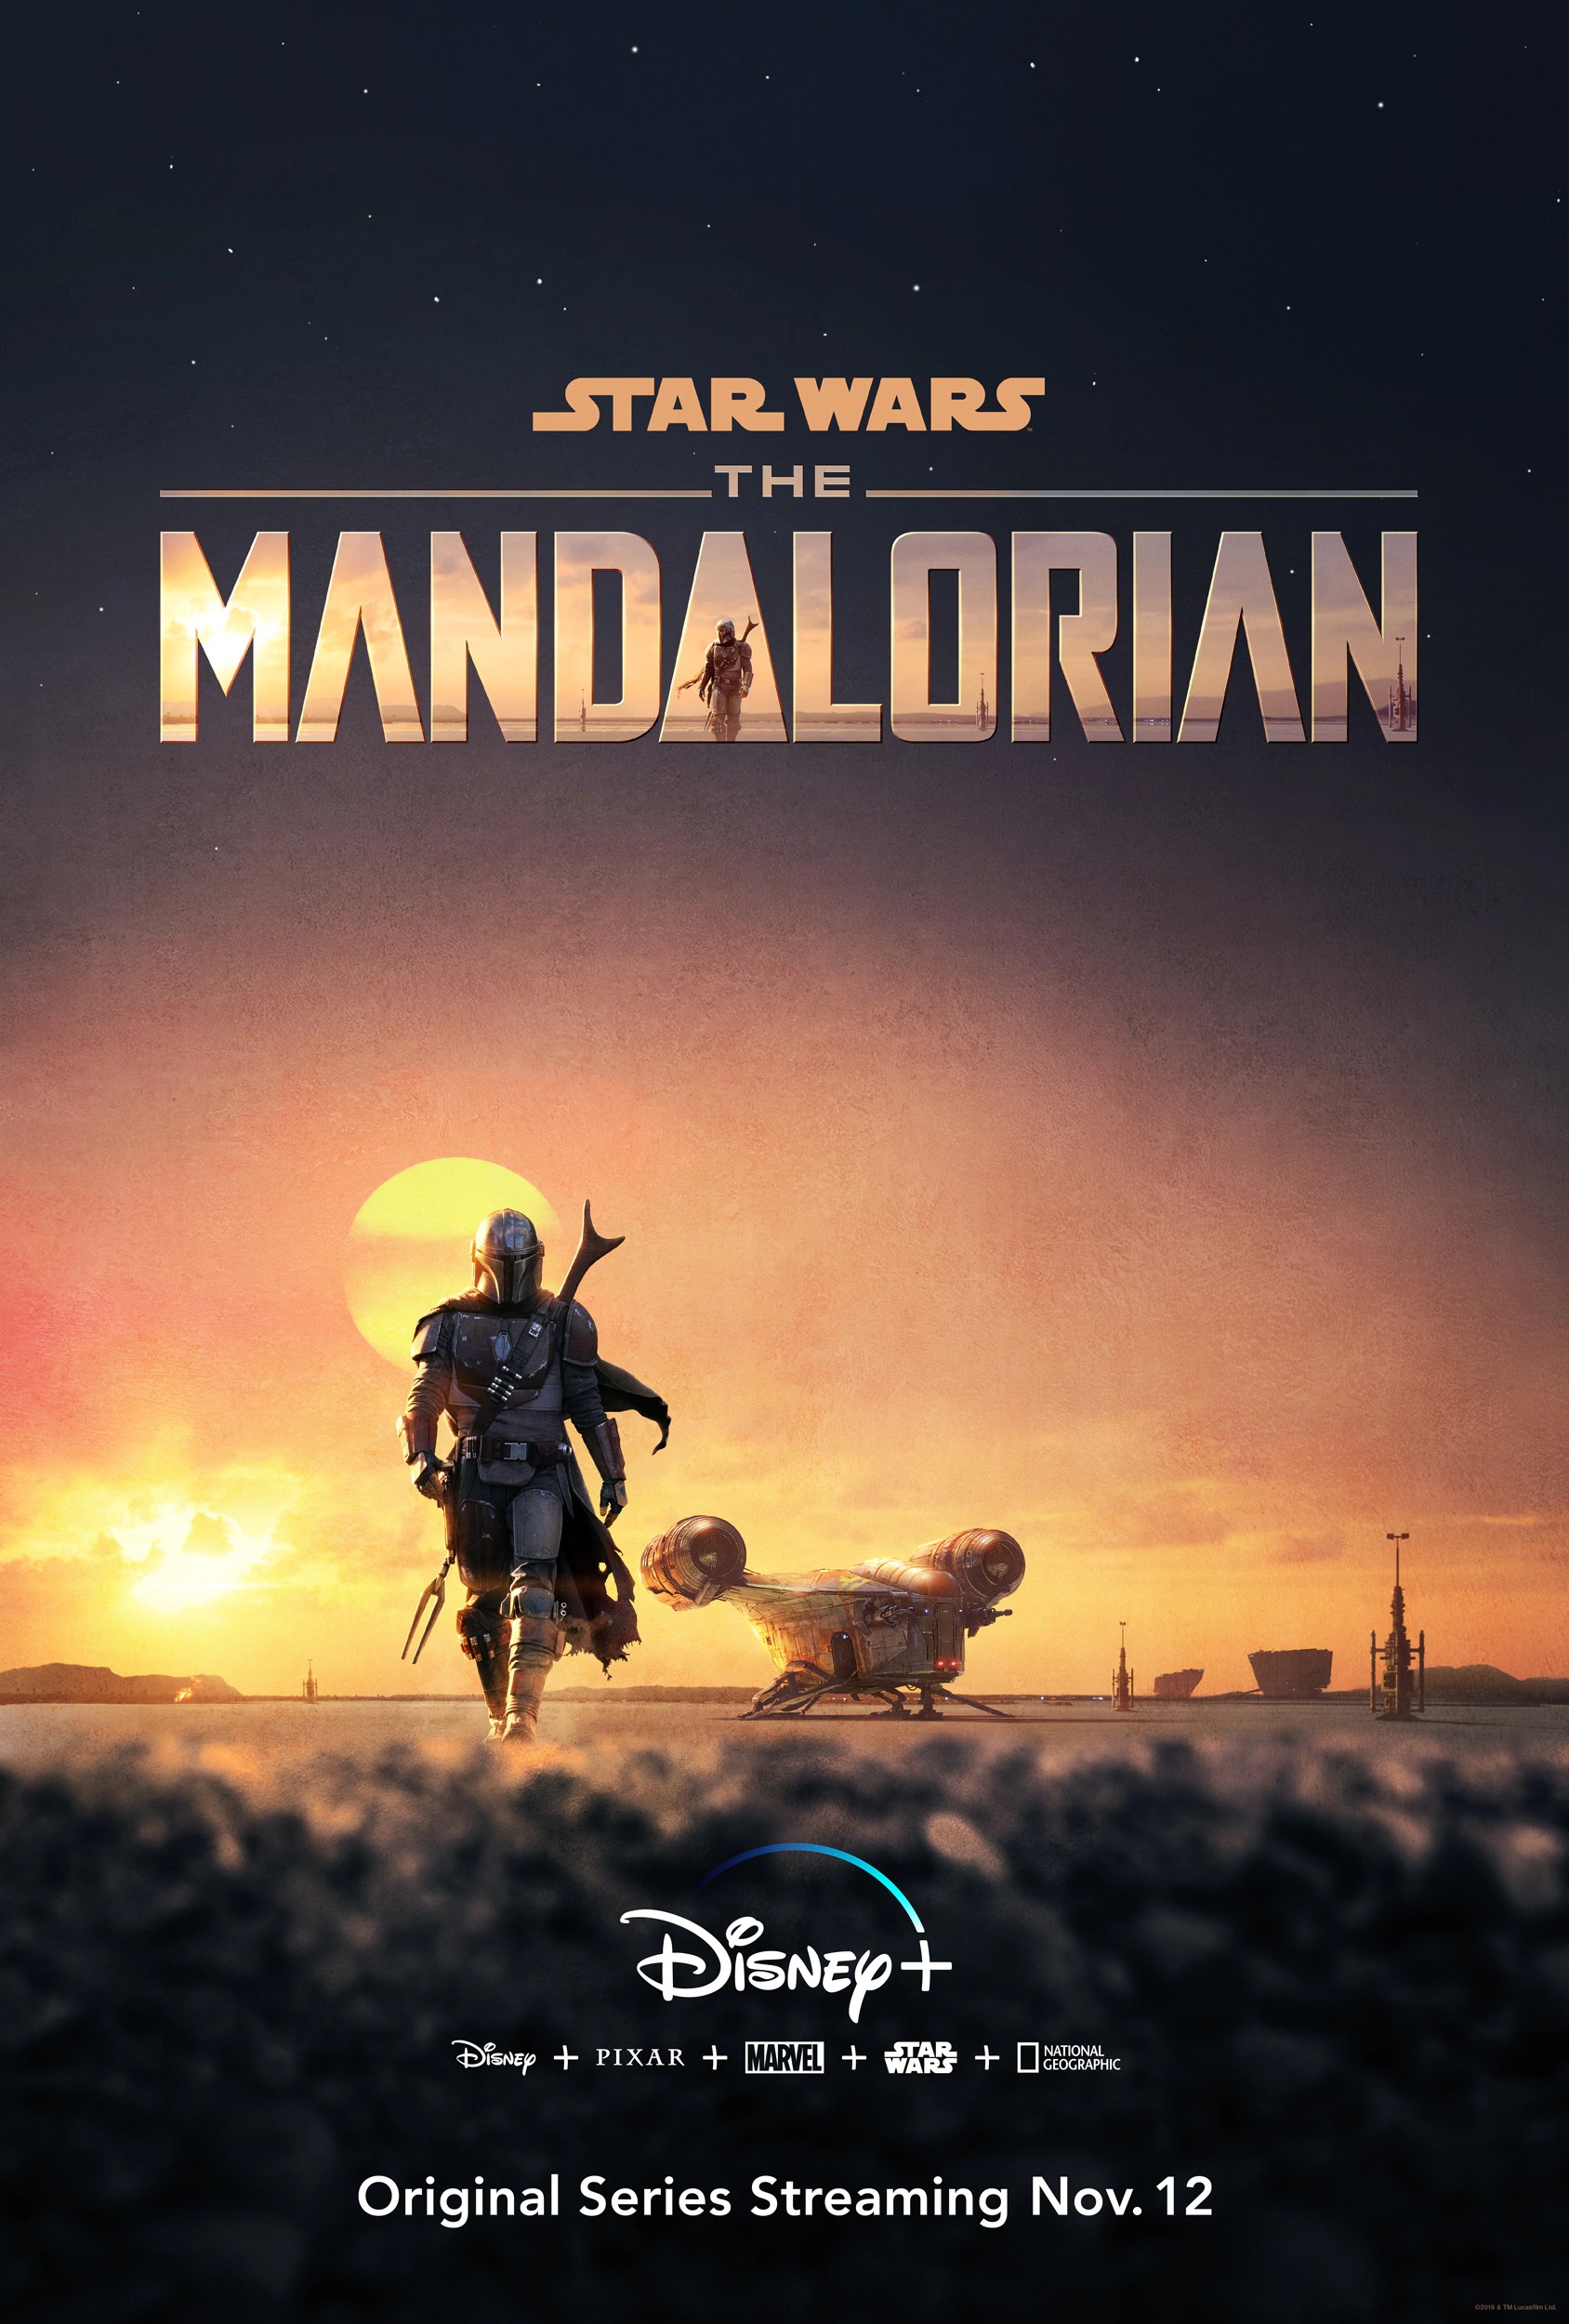 Star Wars The Mandalorian Trailer - Disney+